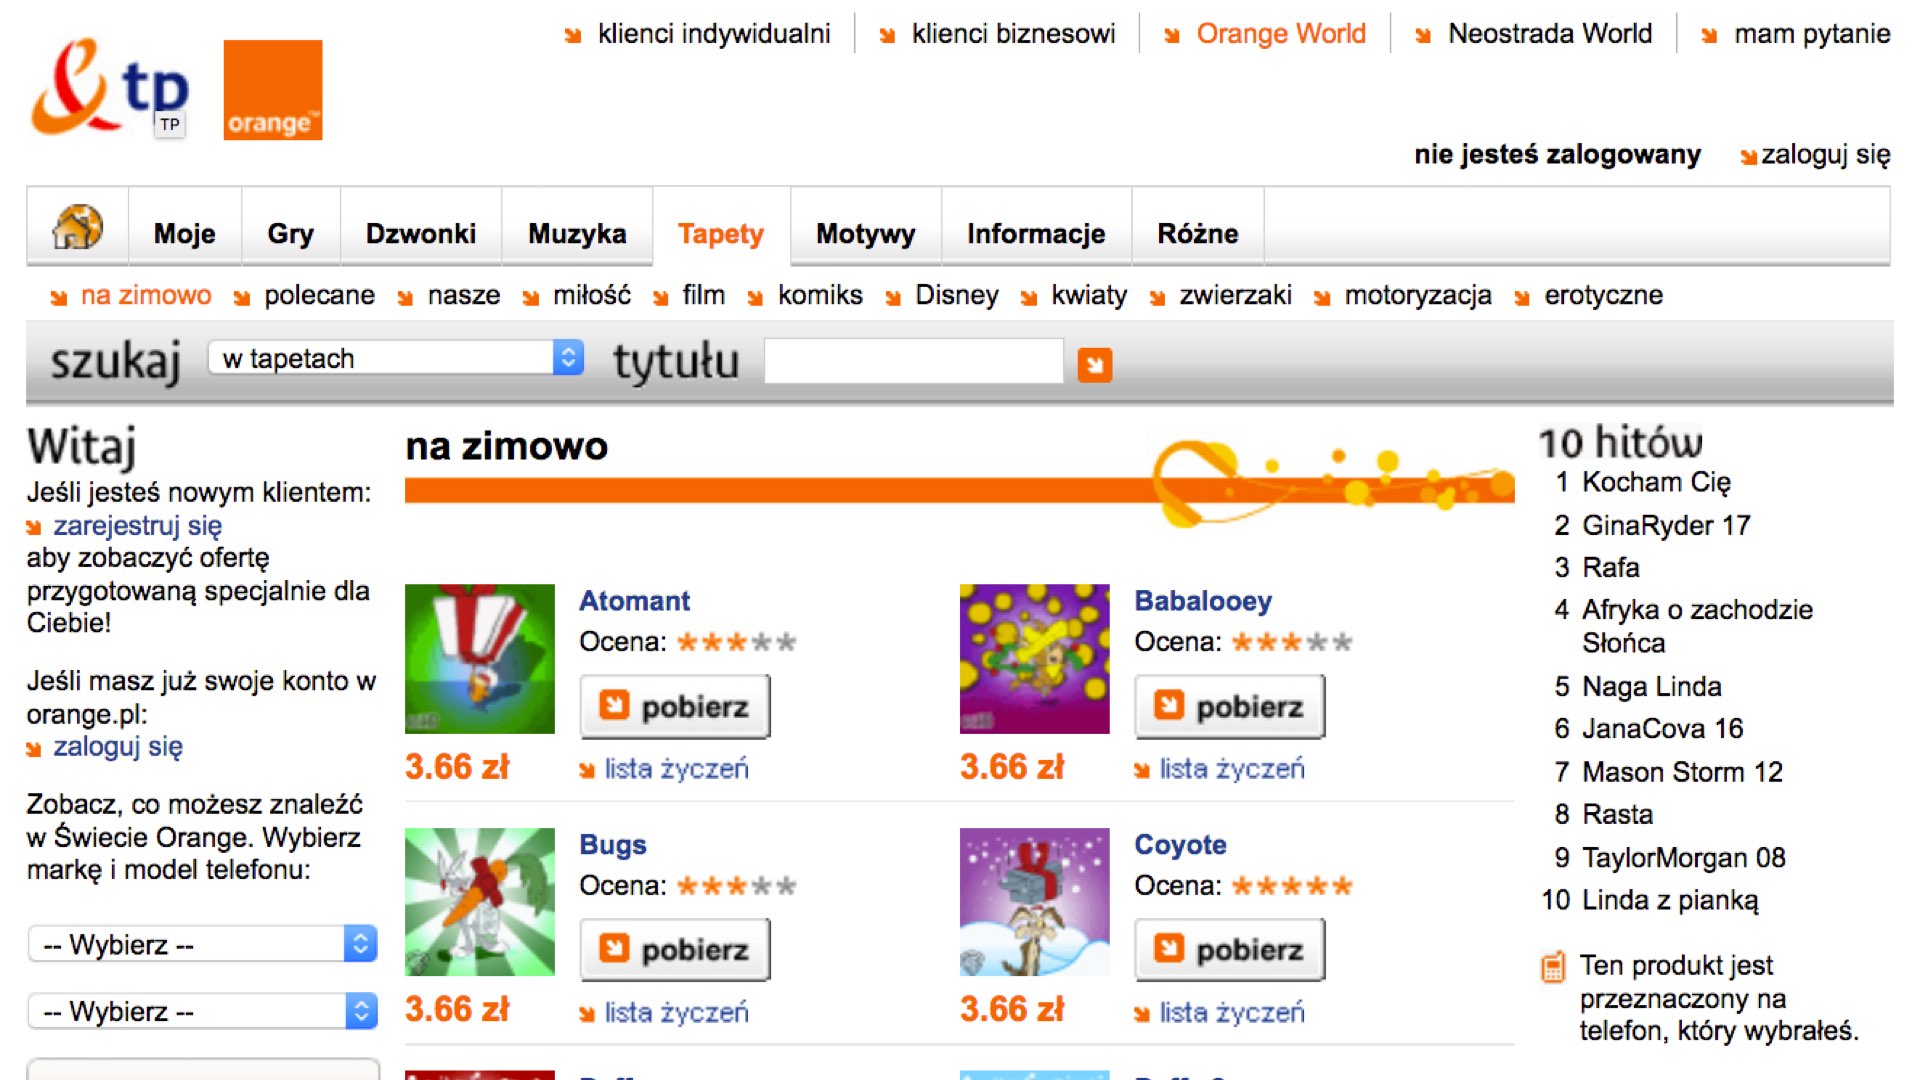 The Orange World website from 2005